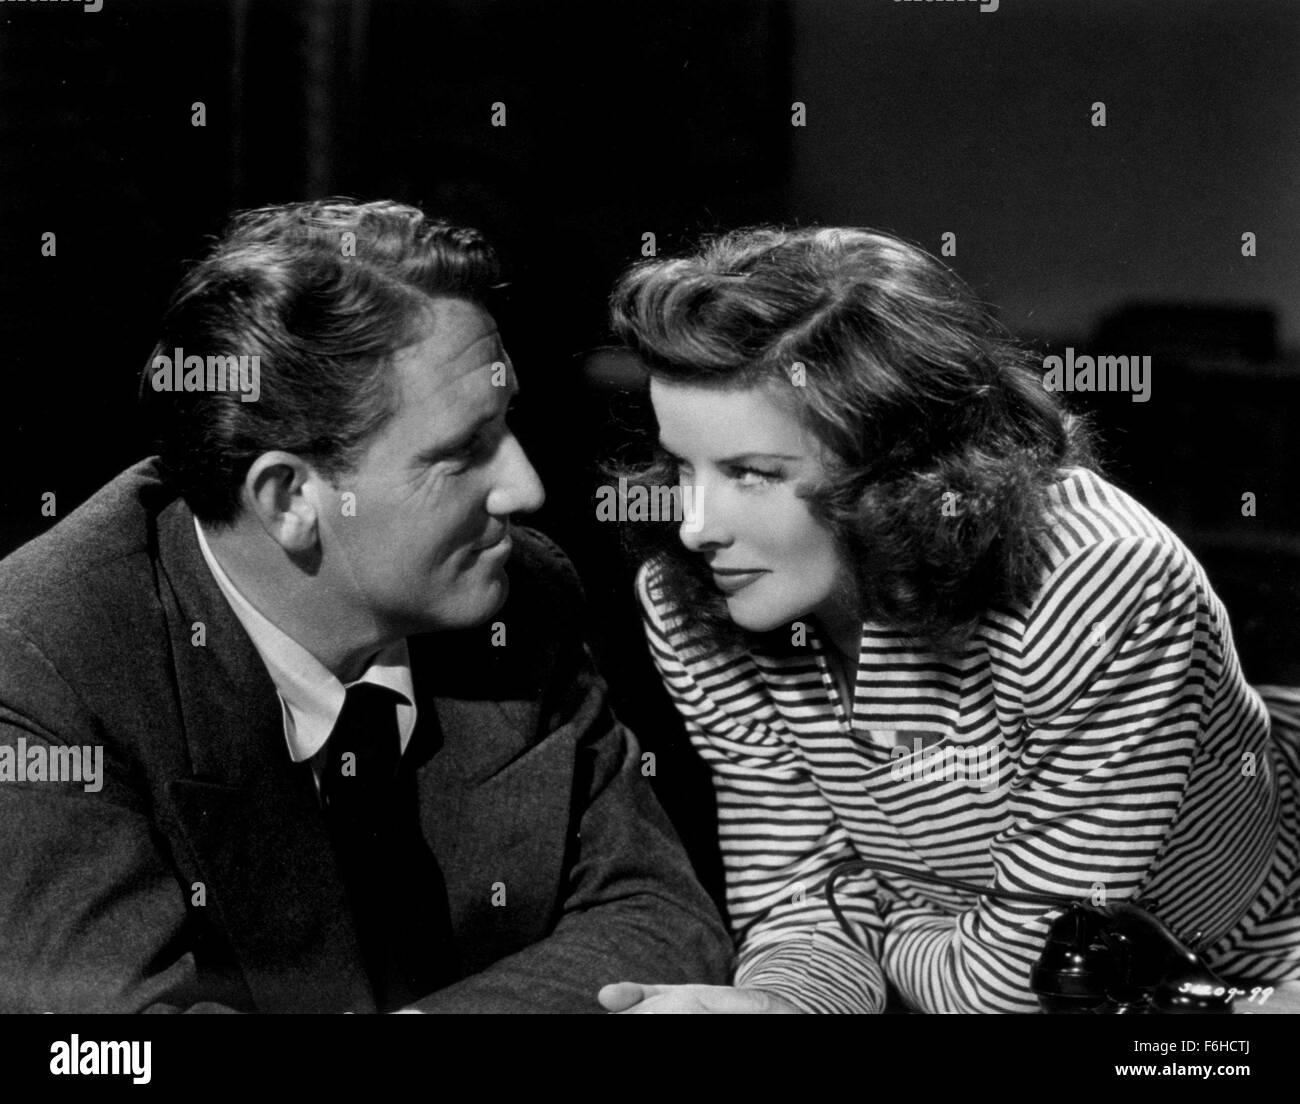 1942, Filmtitel: WOMAN OF THE YEAR, Regisseur: GEORGE STEVENS, Studio: MGM, abgebildet: 1942, KATHARINE HEPBURN, GEORGE STEVENS, SPENCER TRACY, bestaunen. (Bild Kredit: SNAP) Stockfoto